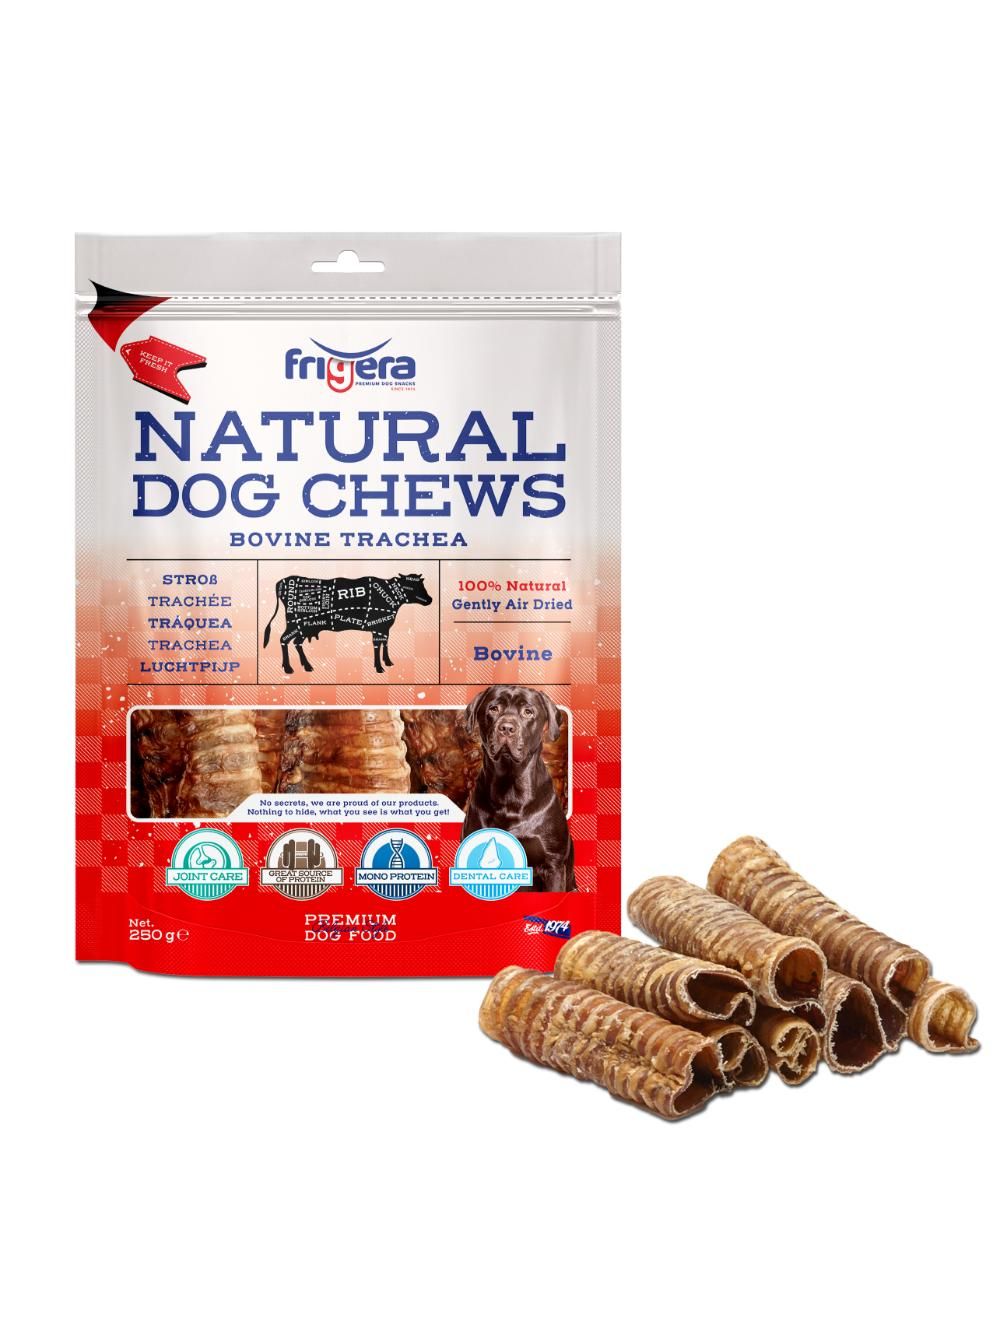 Frigera - Natural Dog Chews Bovine trachea 250gr - (402285851823) - Kjæledyr og utstyr